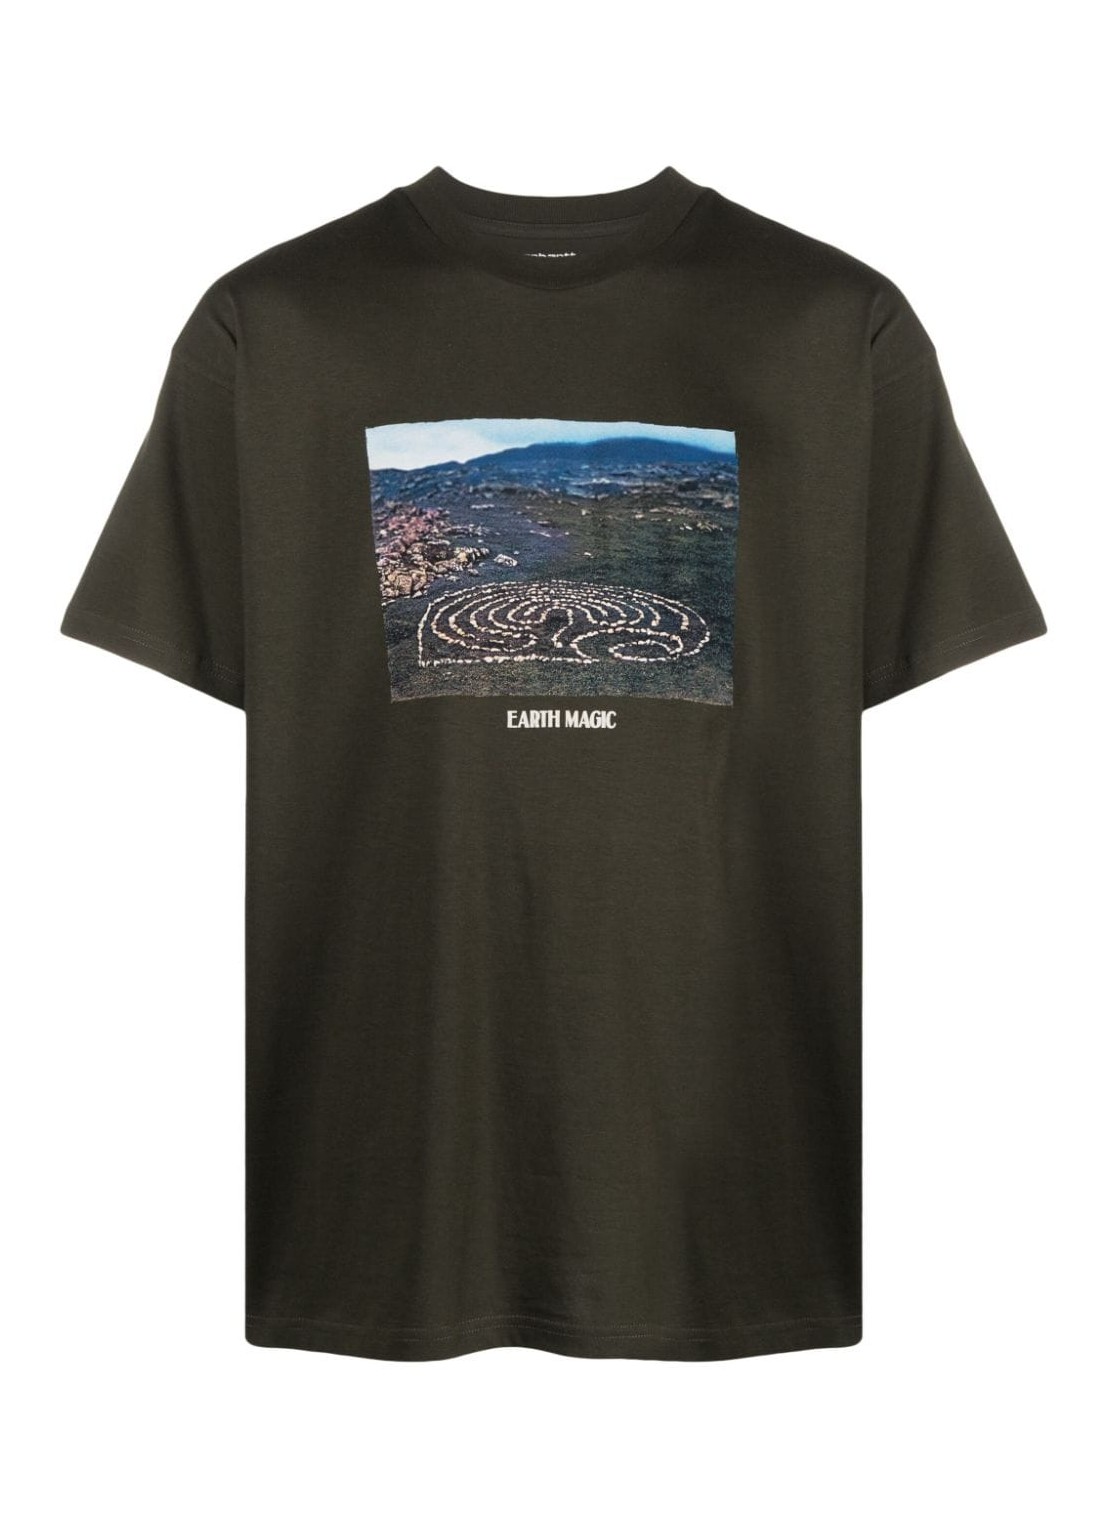 Camiseta carhartt t-shirt man s/s earth magic t-shirt i032879 63xx talla verde
 